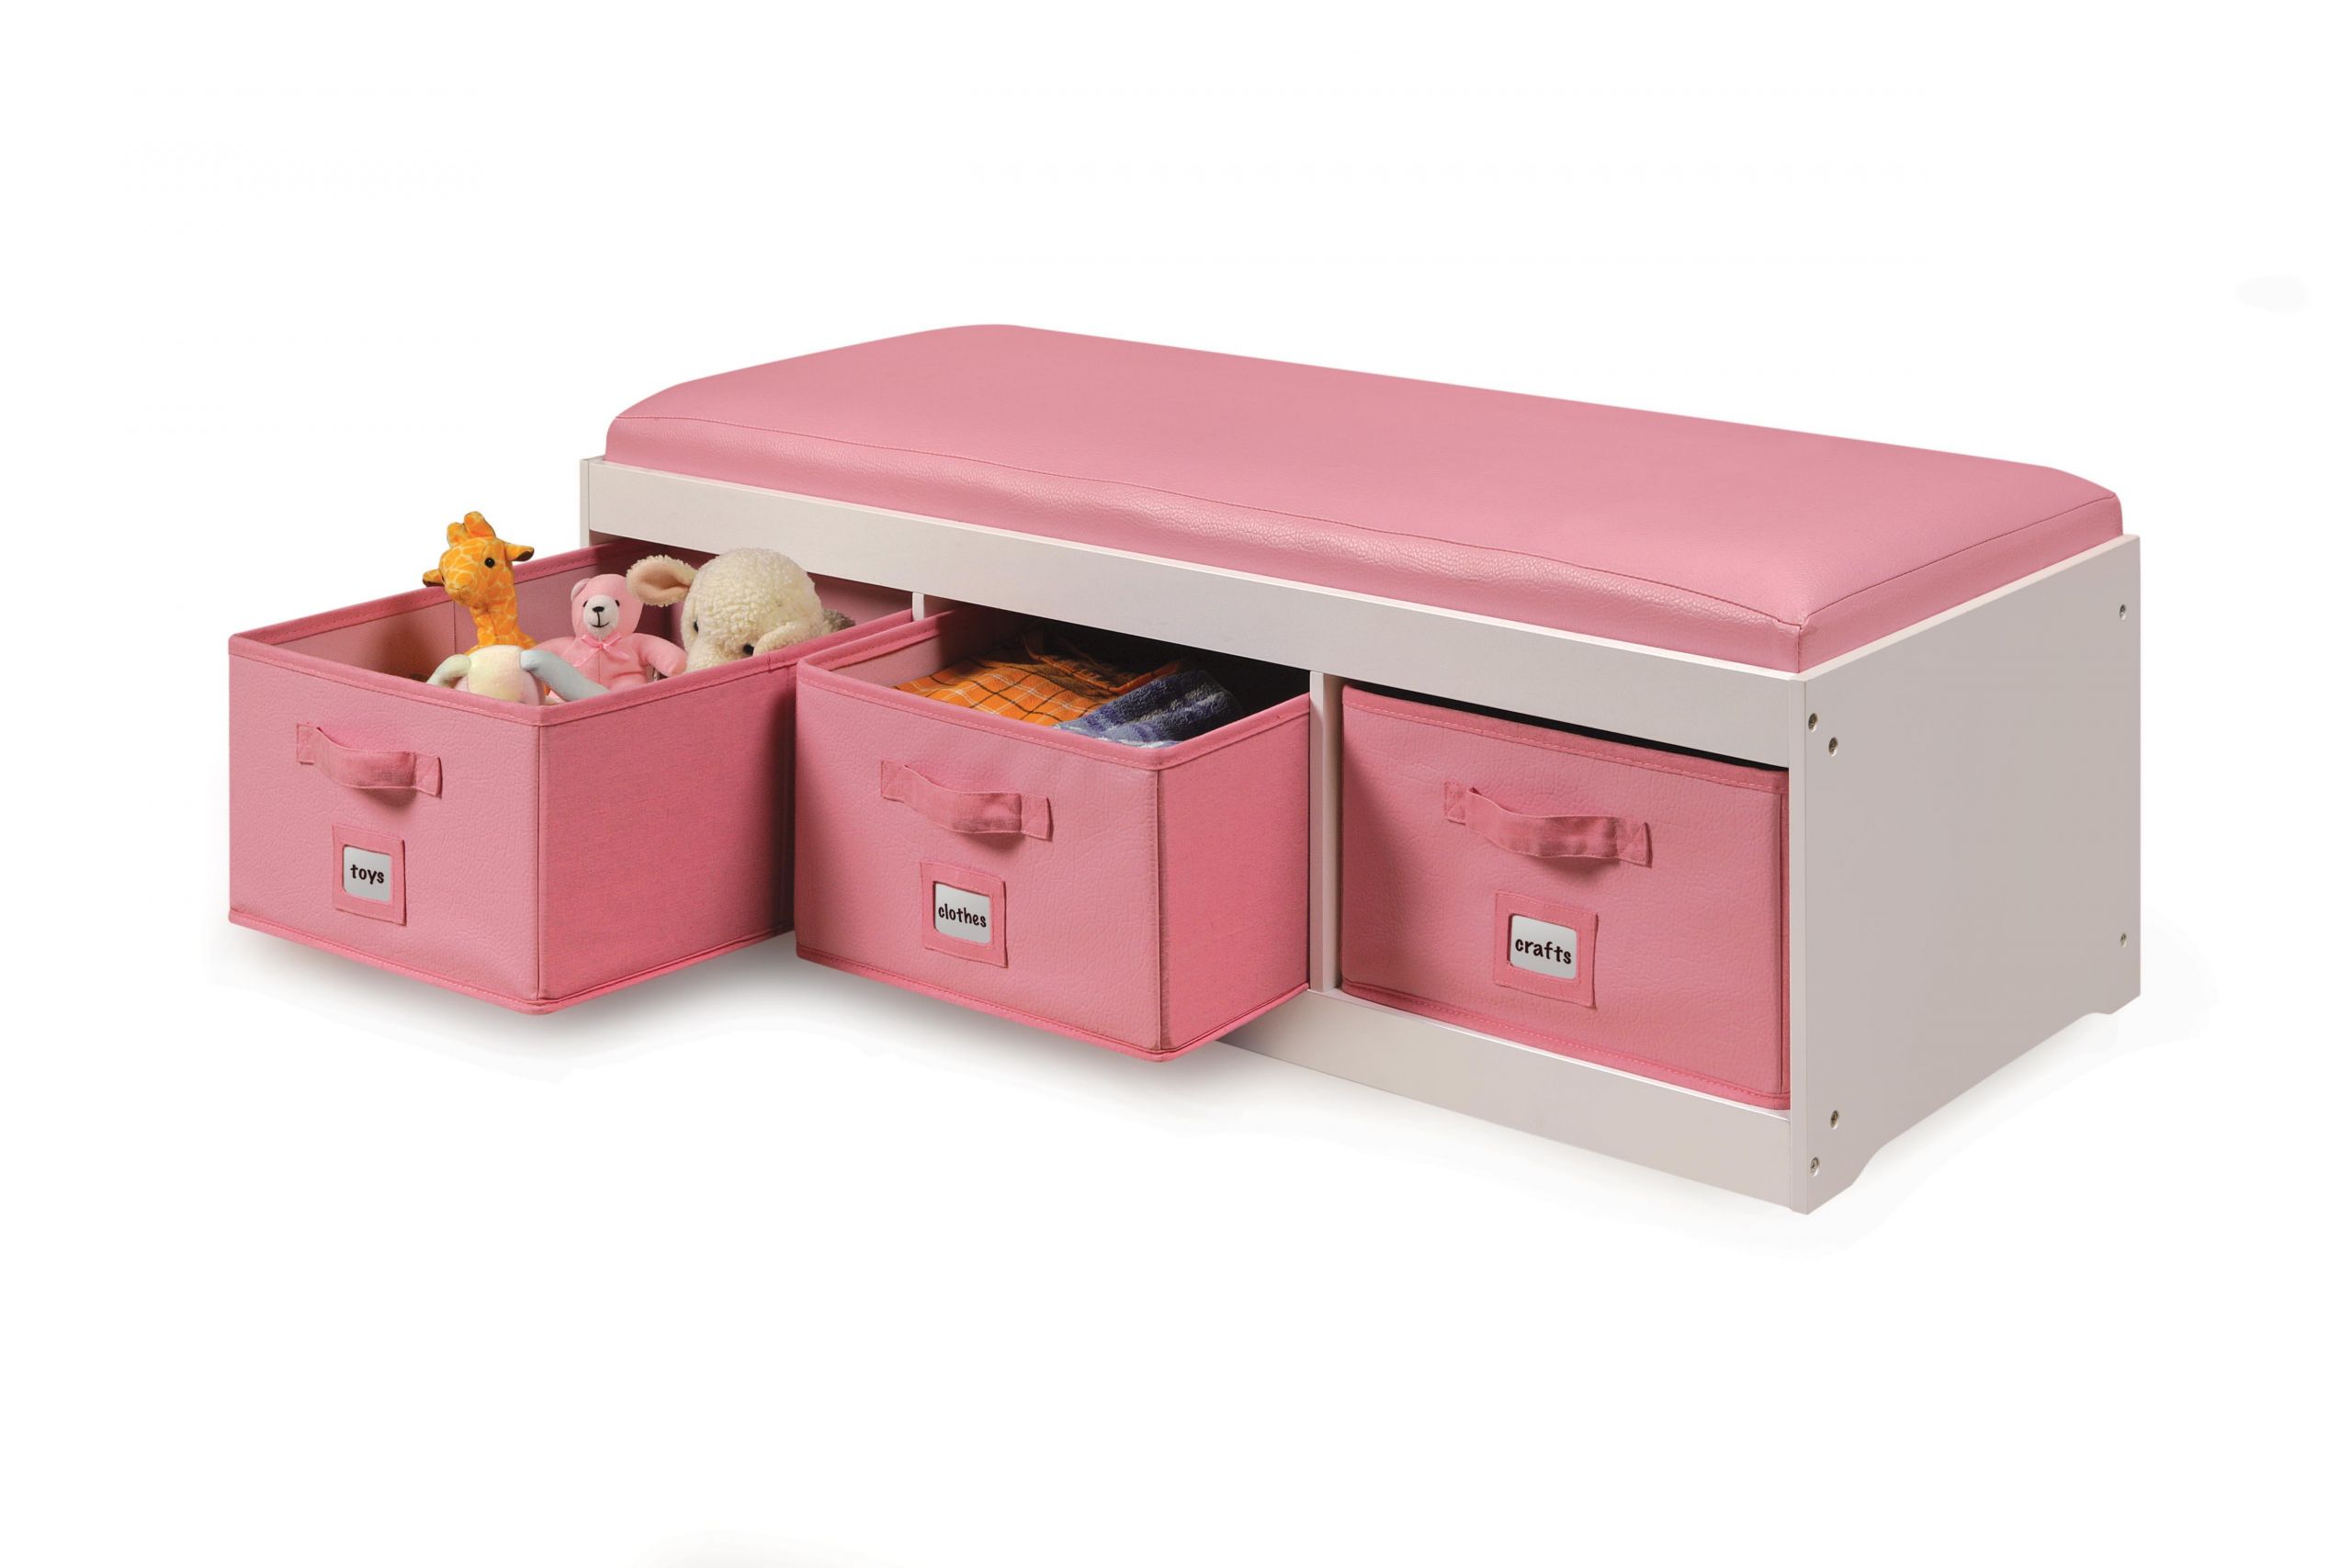 Storage Bench For Kids
 Amazon Kid s Cushioned Storage Bench with 3 Basket